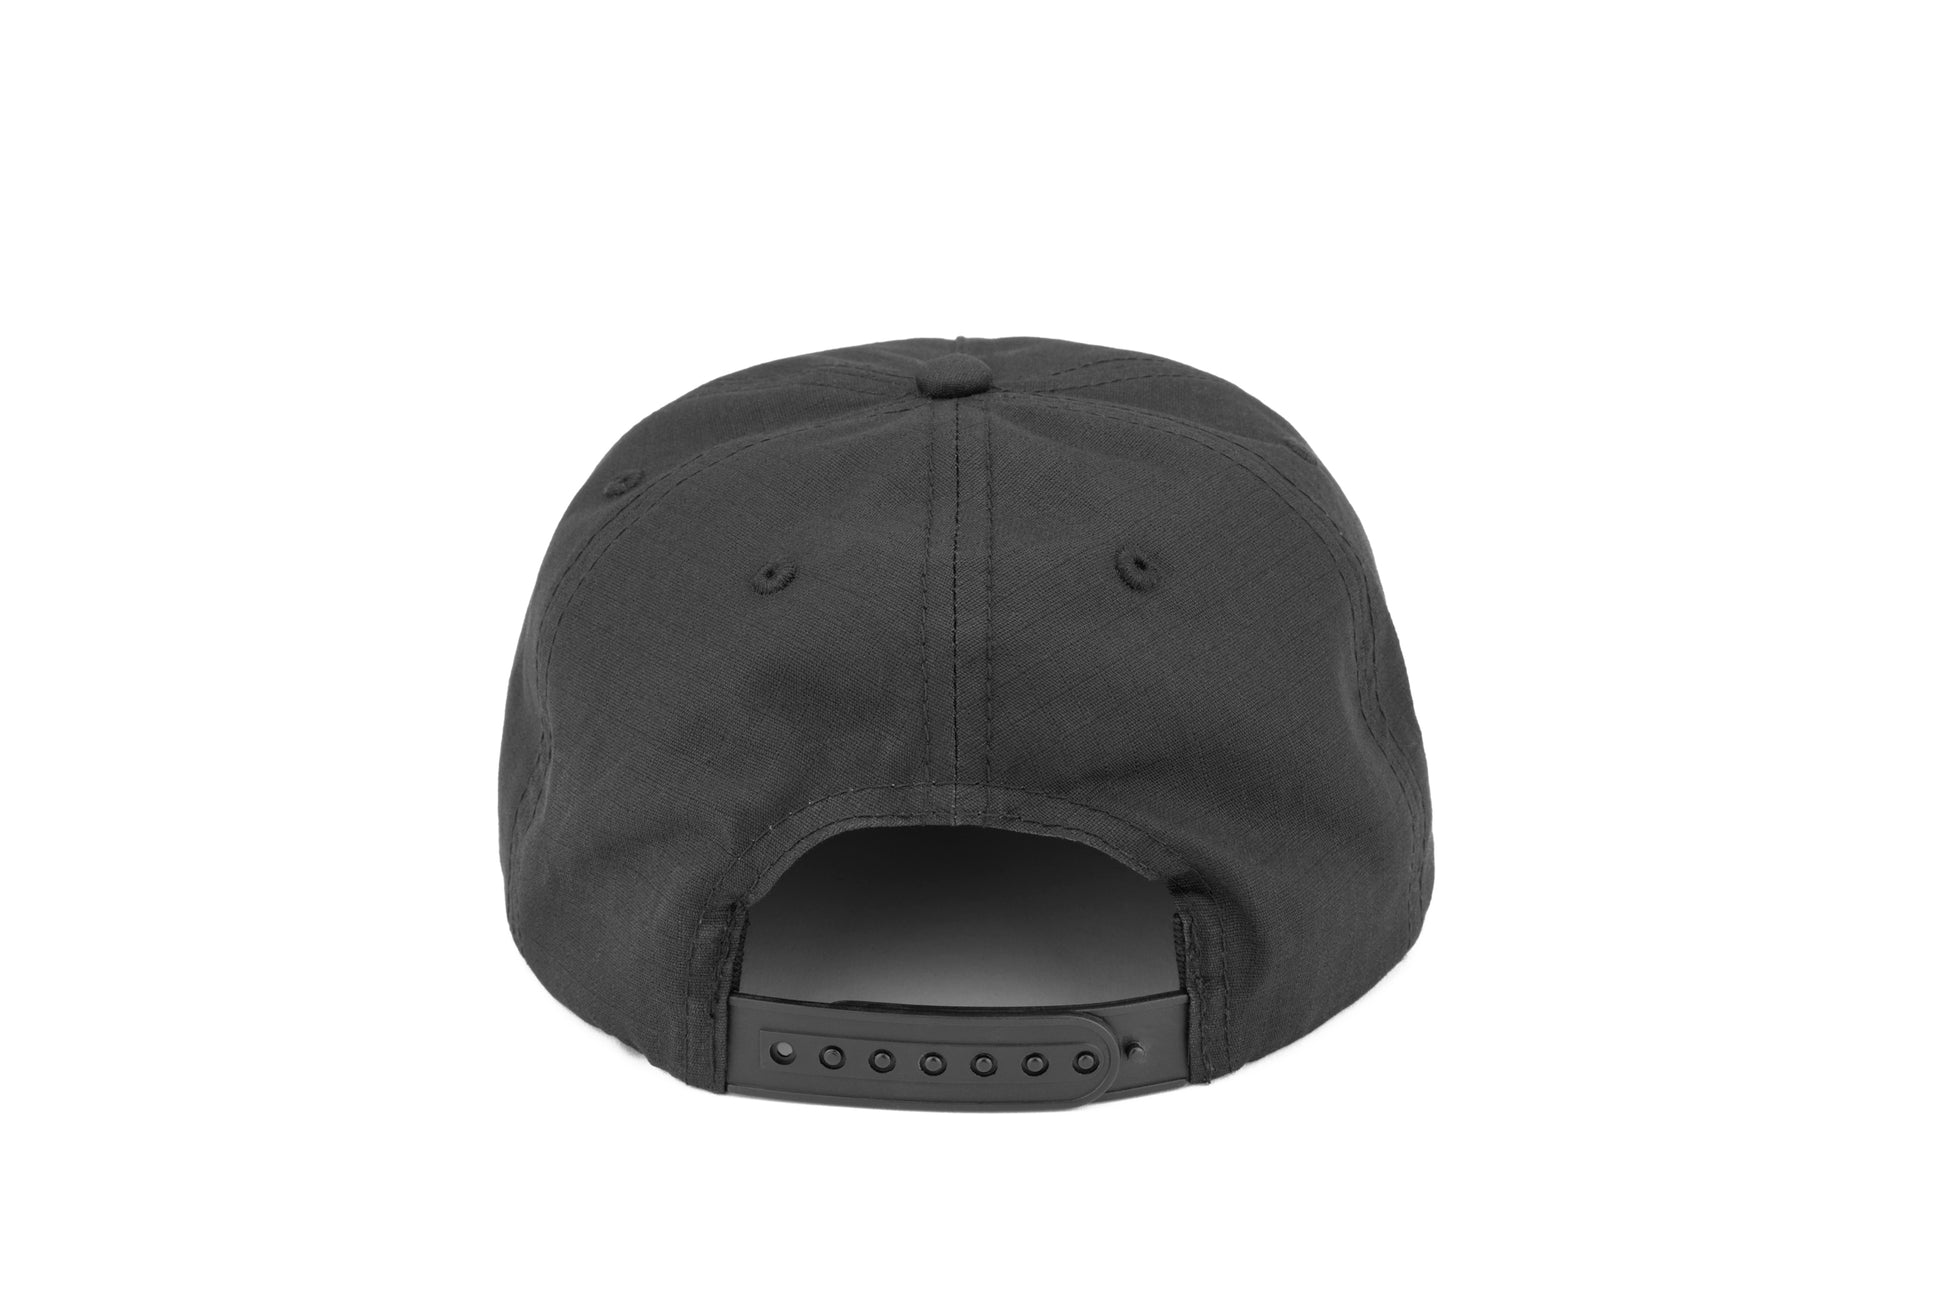 Back of black hat that shows plastic snapback